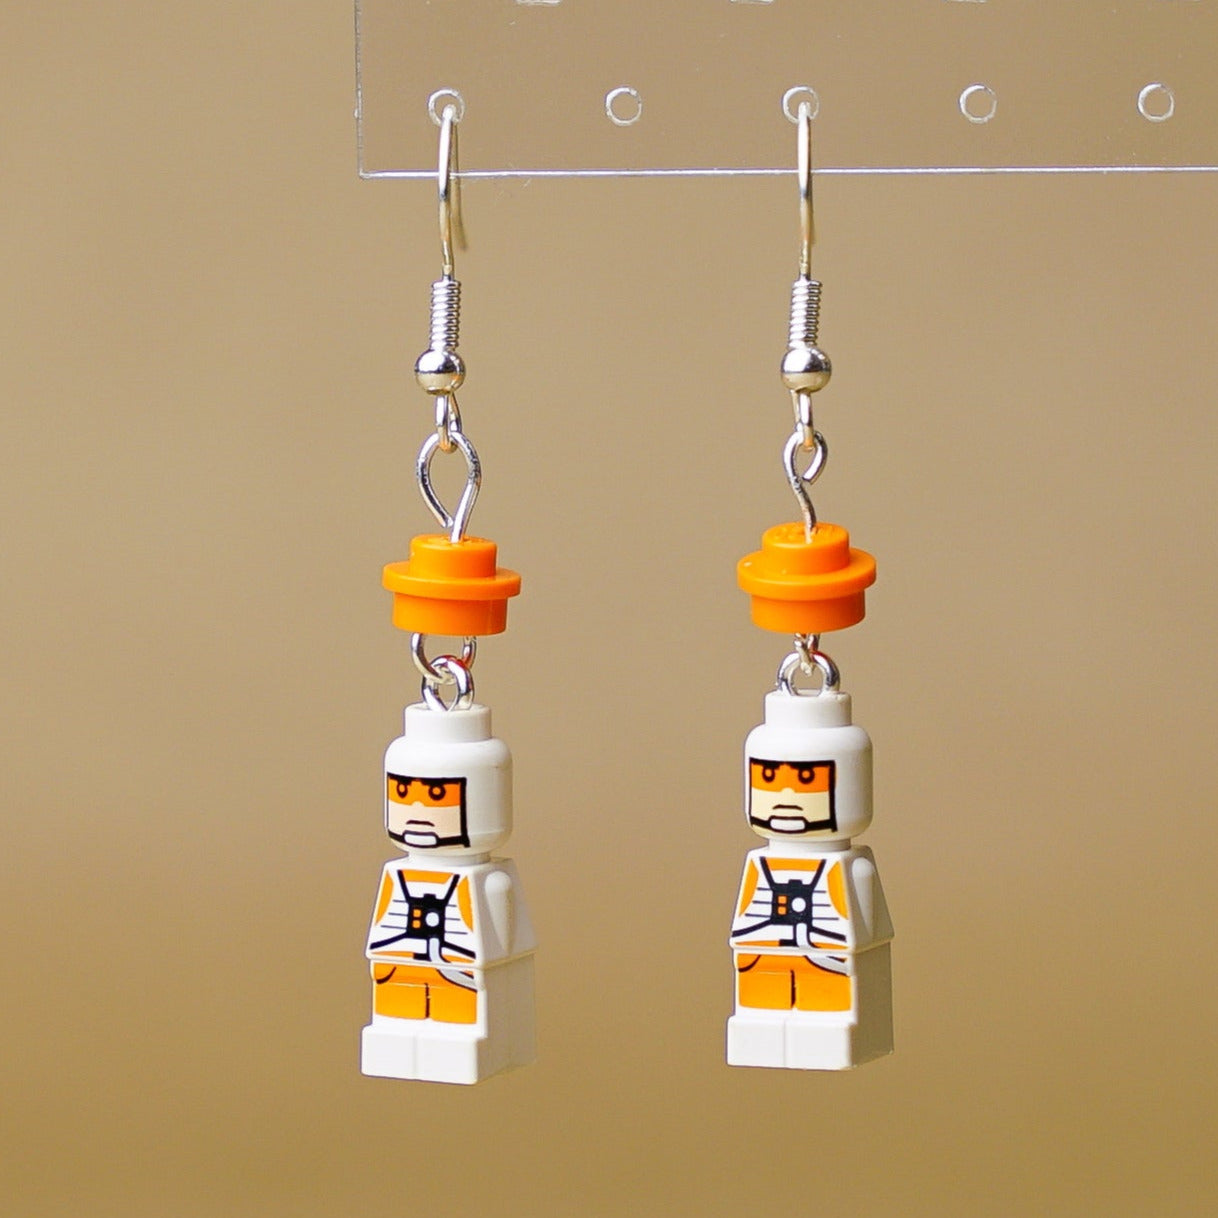 StudBee - Micro Rebel Star Pilot Minifigure Earrings, Handmade with Lego® Episode 4/5/6